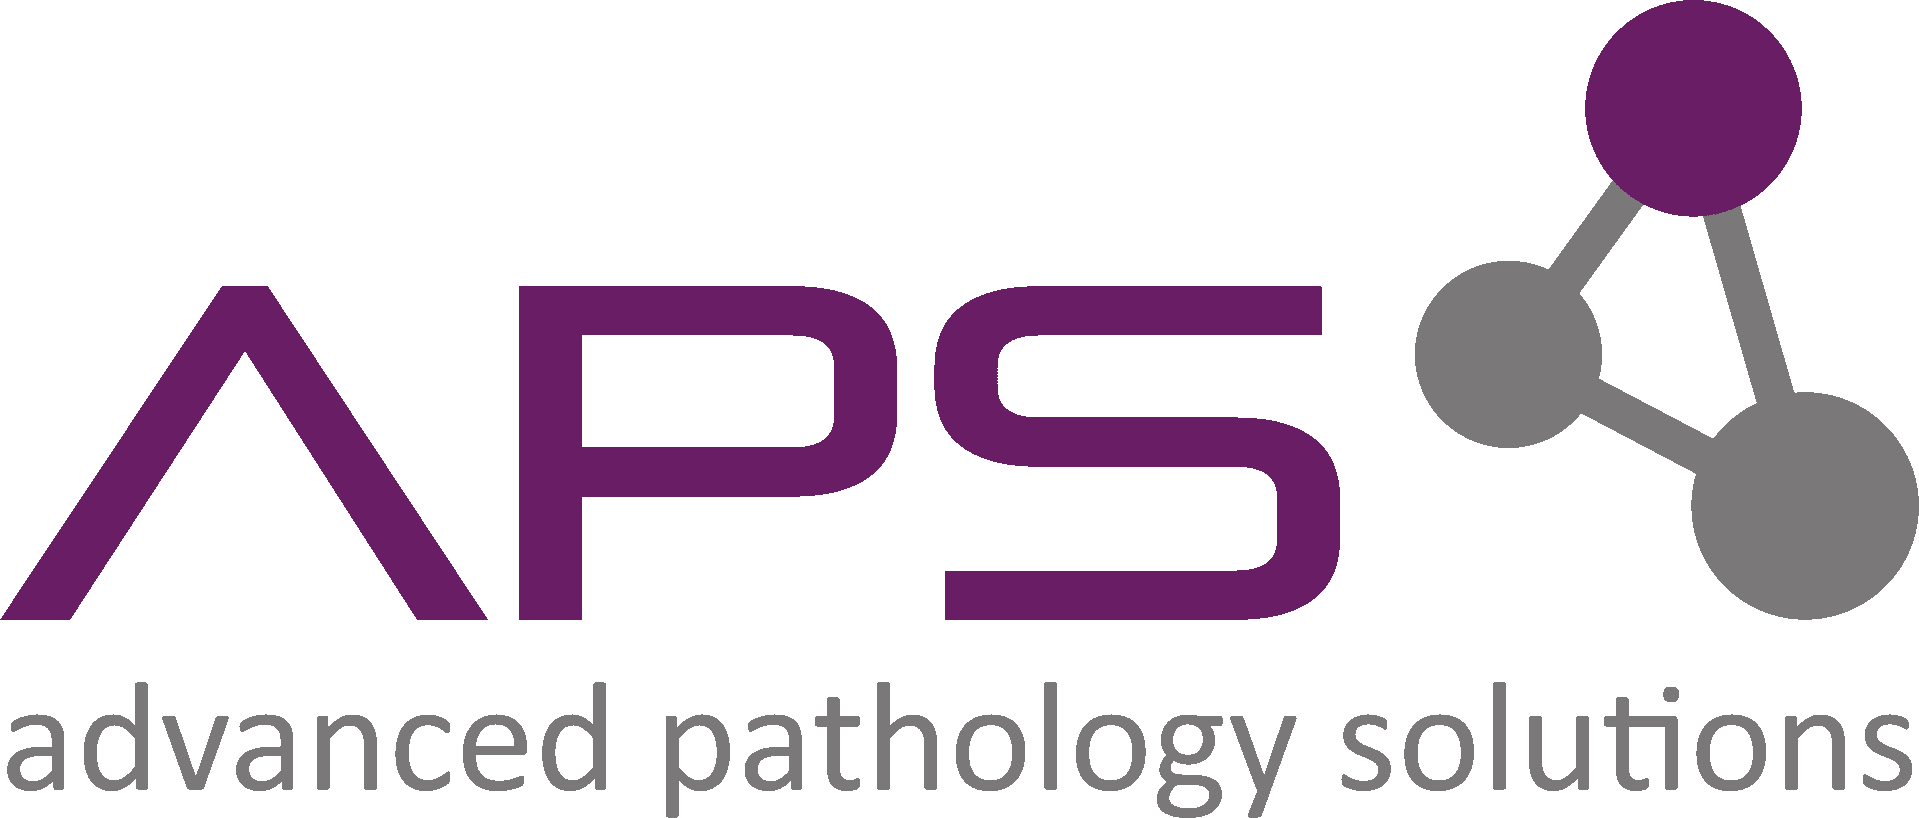 Advanced Pathology Solutions logo